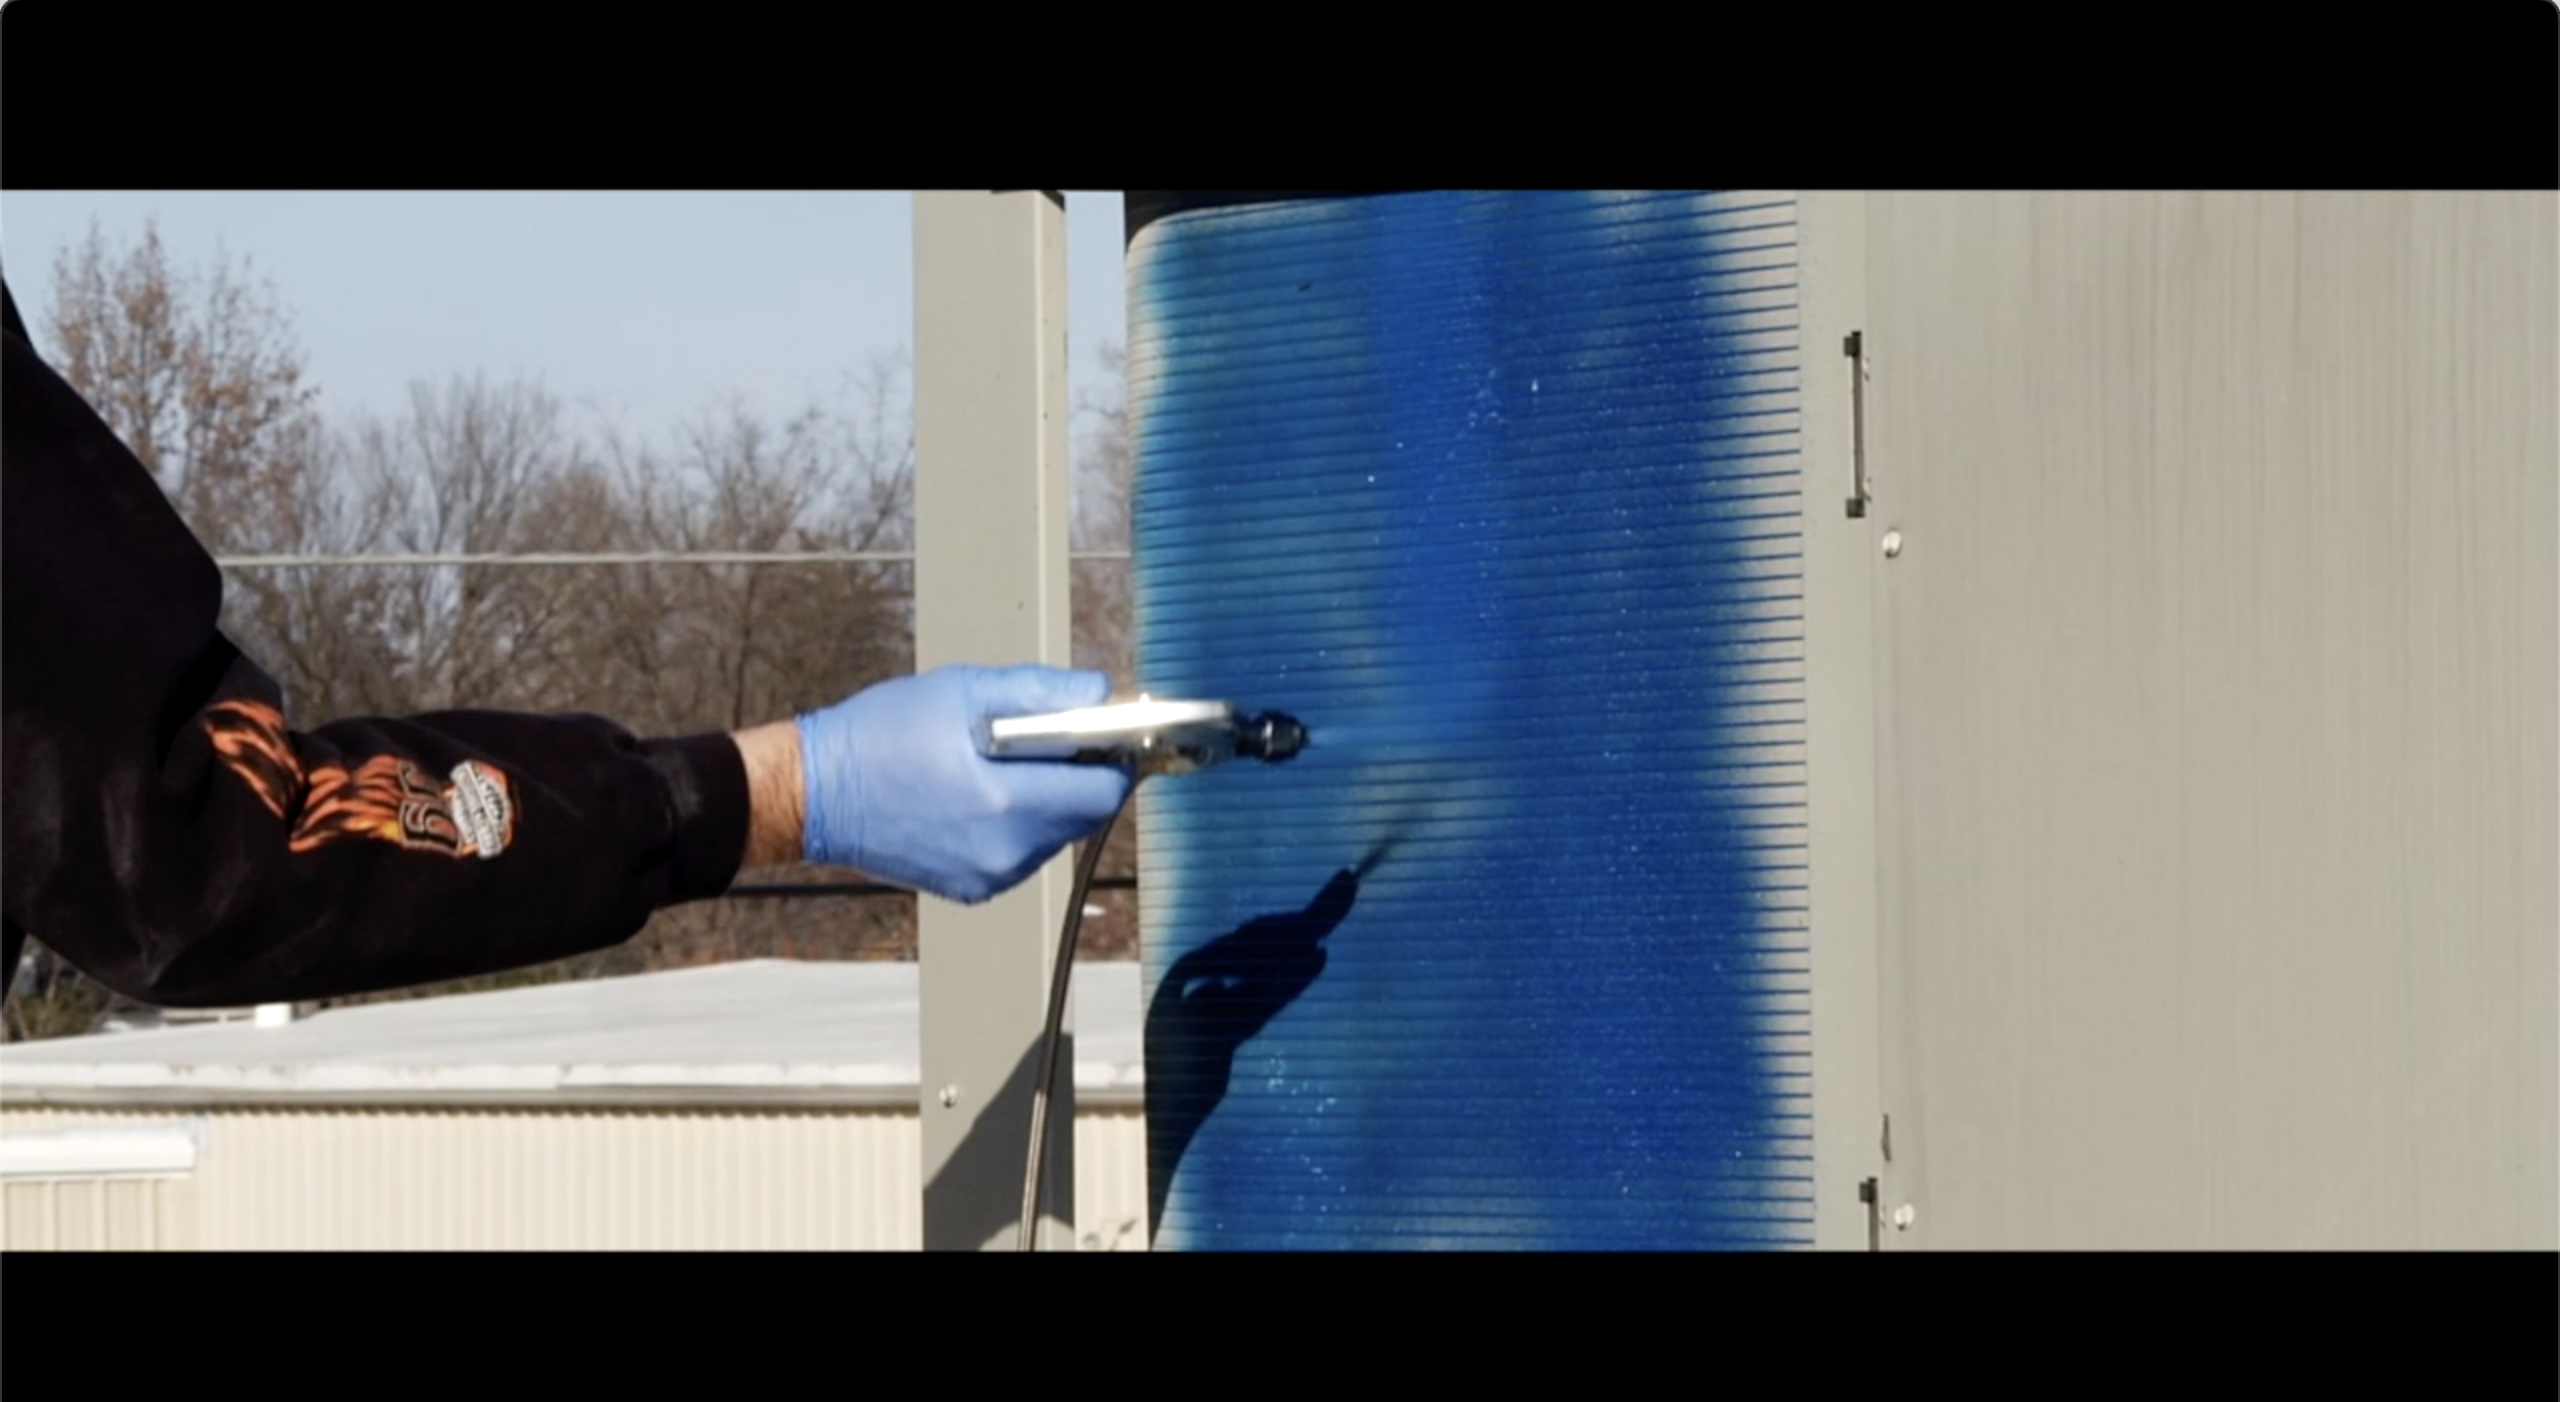 Blue 41 Coil Cleaner- Gallon - VAPCO Company - Innovating HVACR